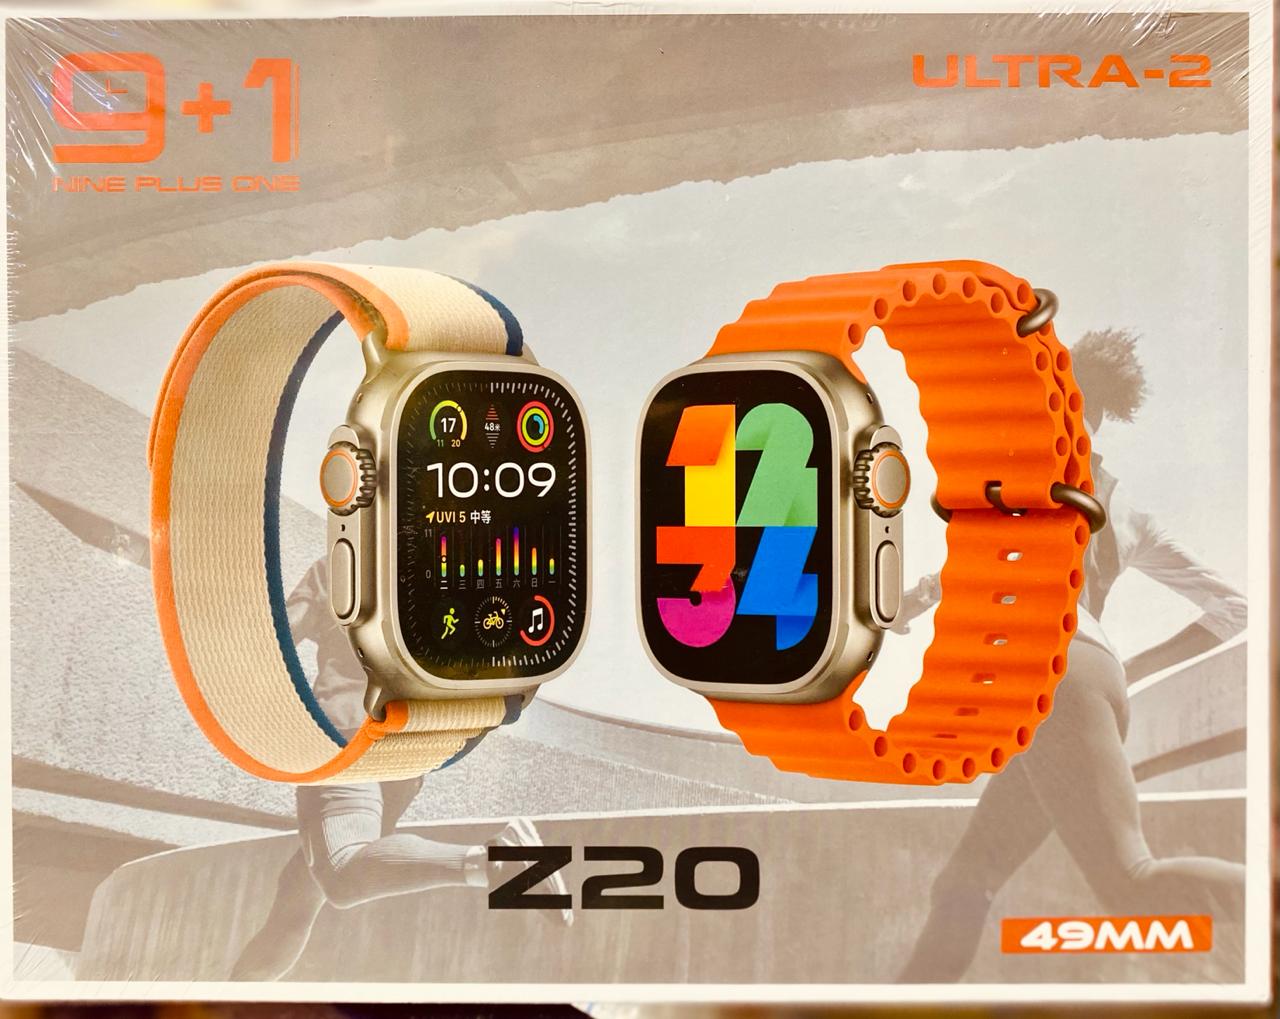 Ultra watch 2 Z20 full box 9+1